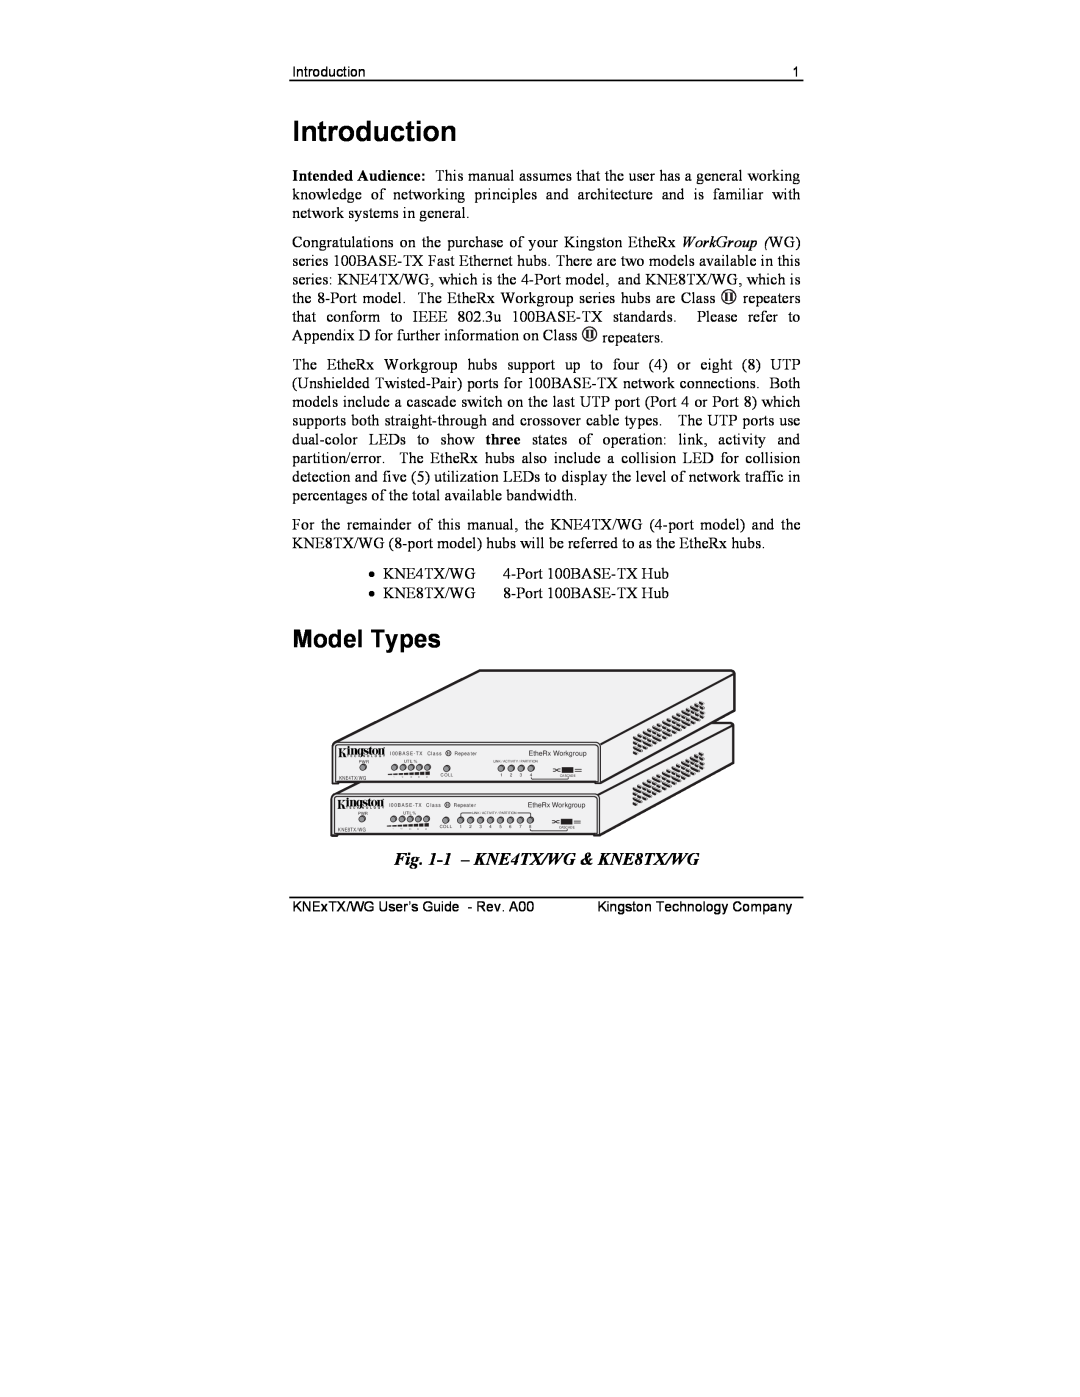 Kingston Technology manual Introduction, Model Types, 1 - KNE4TX/WG & KNE8TX/WG 